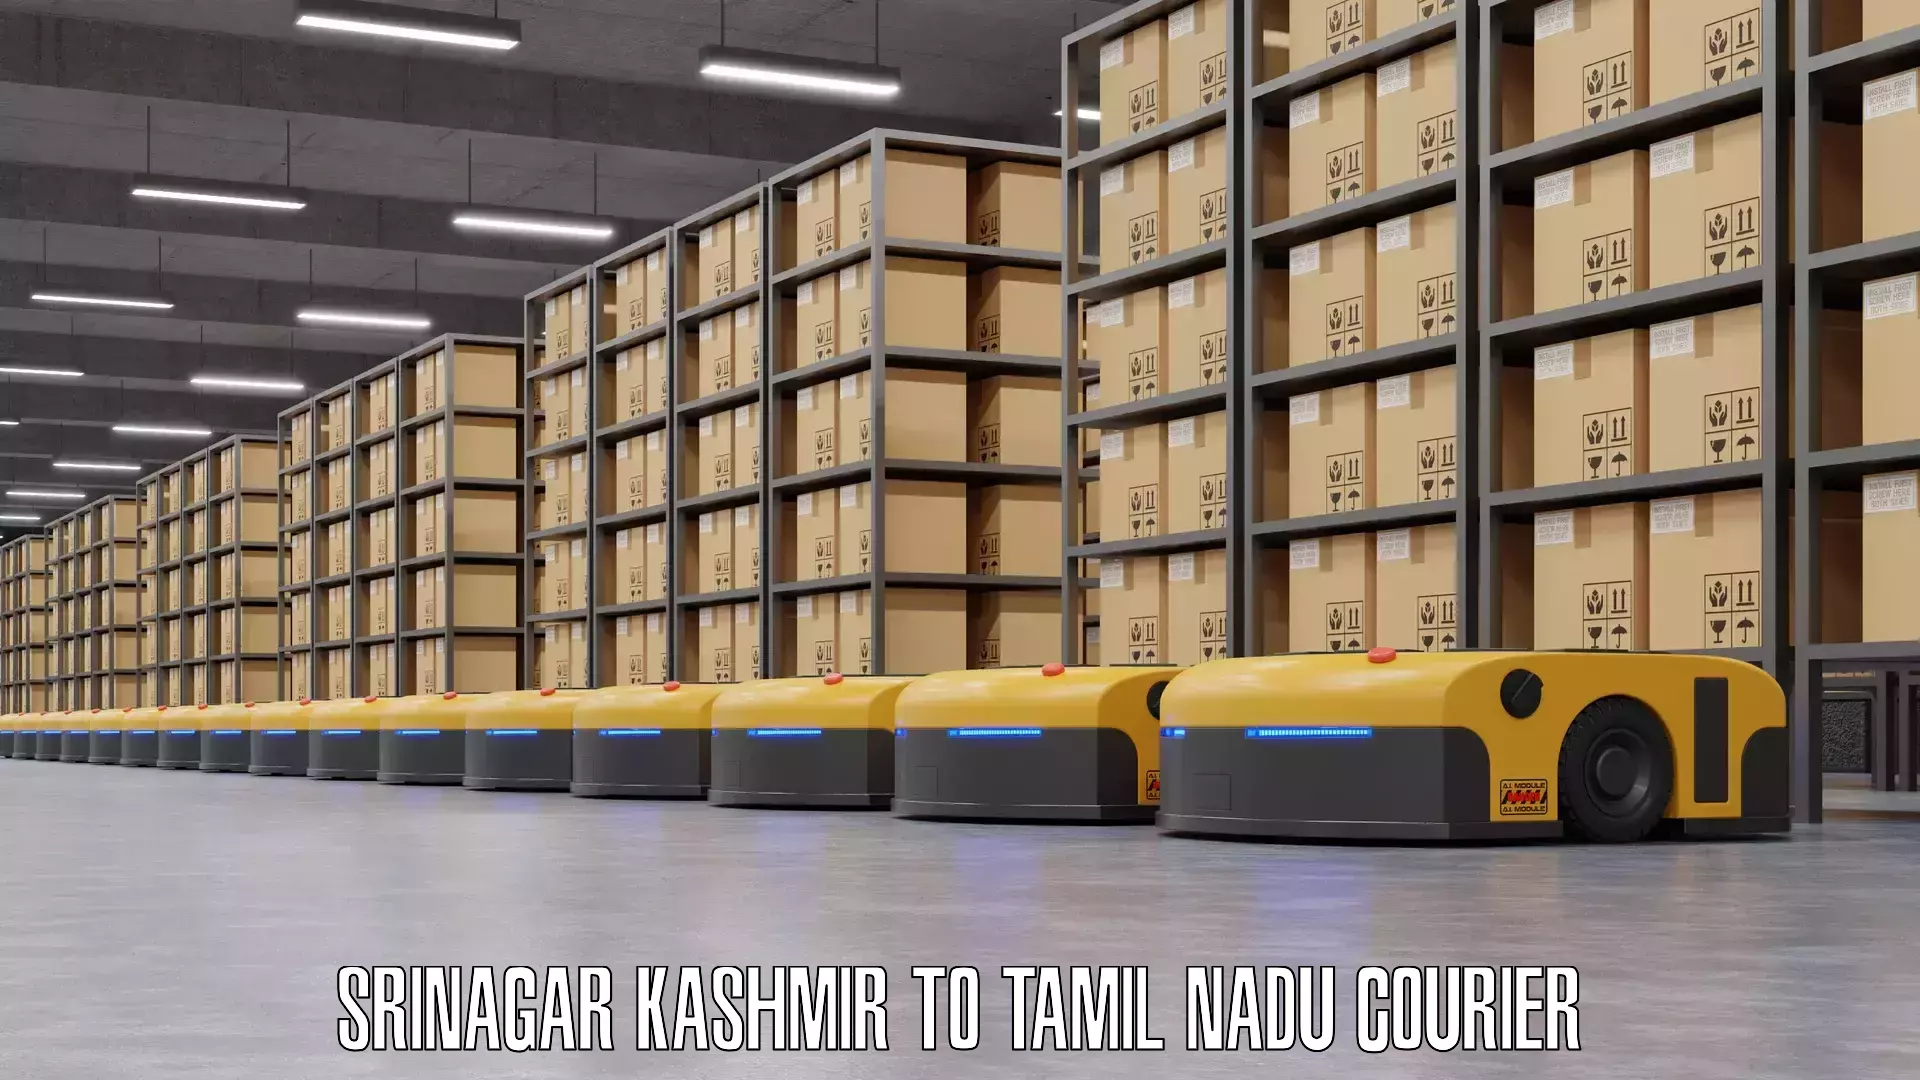 Baggage shipping service Srinagar Kashmir to Tamil Nadu